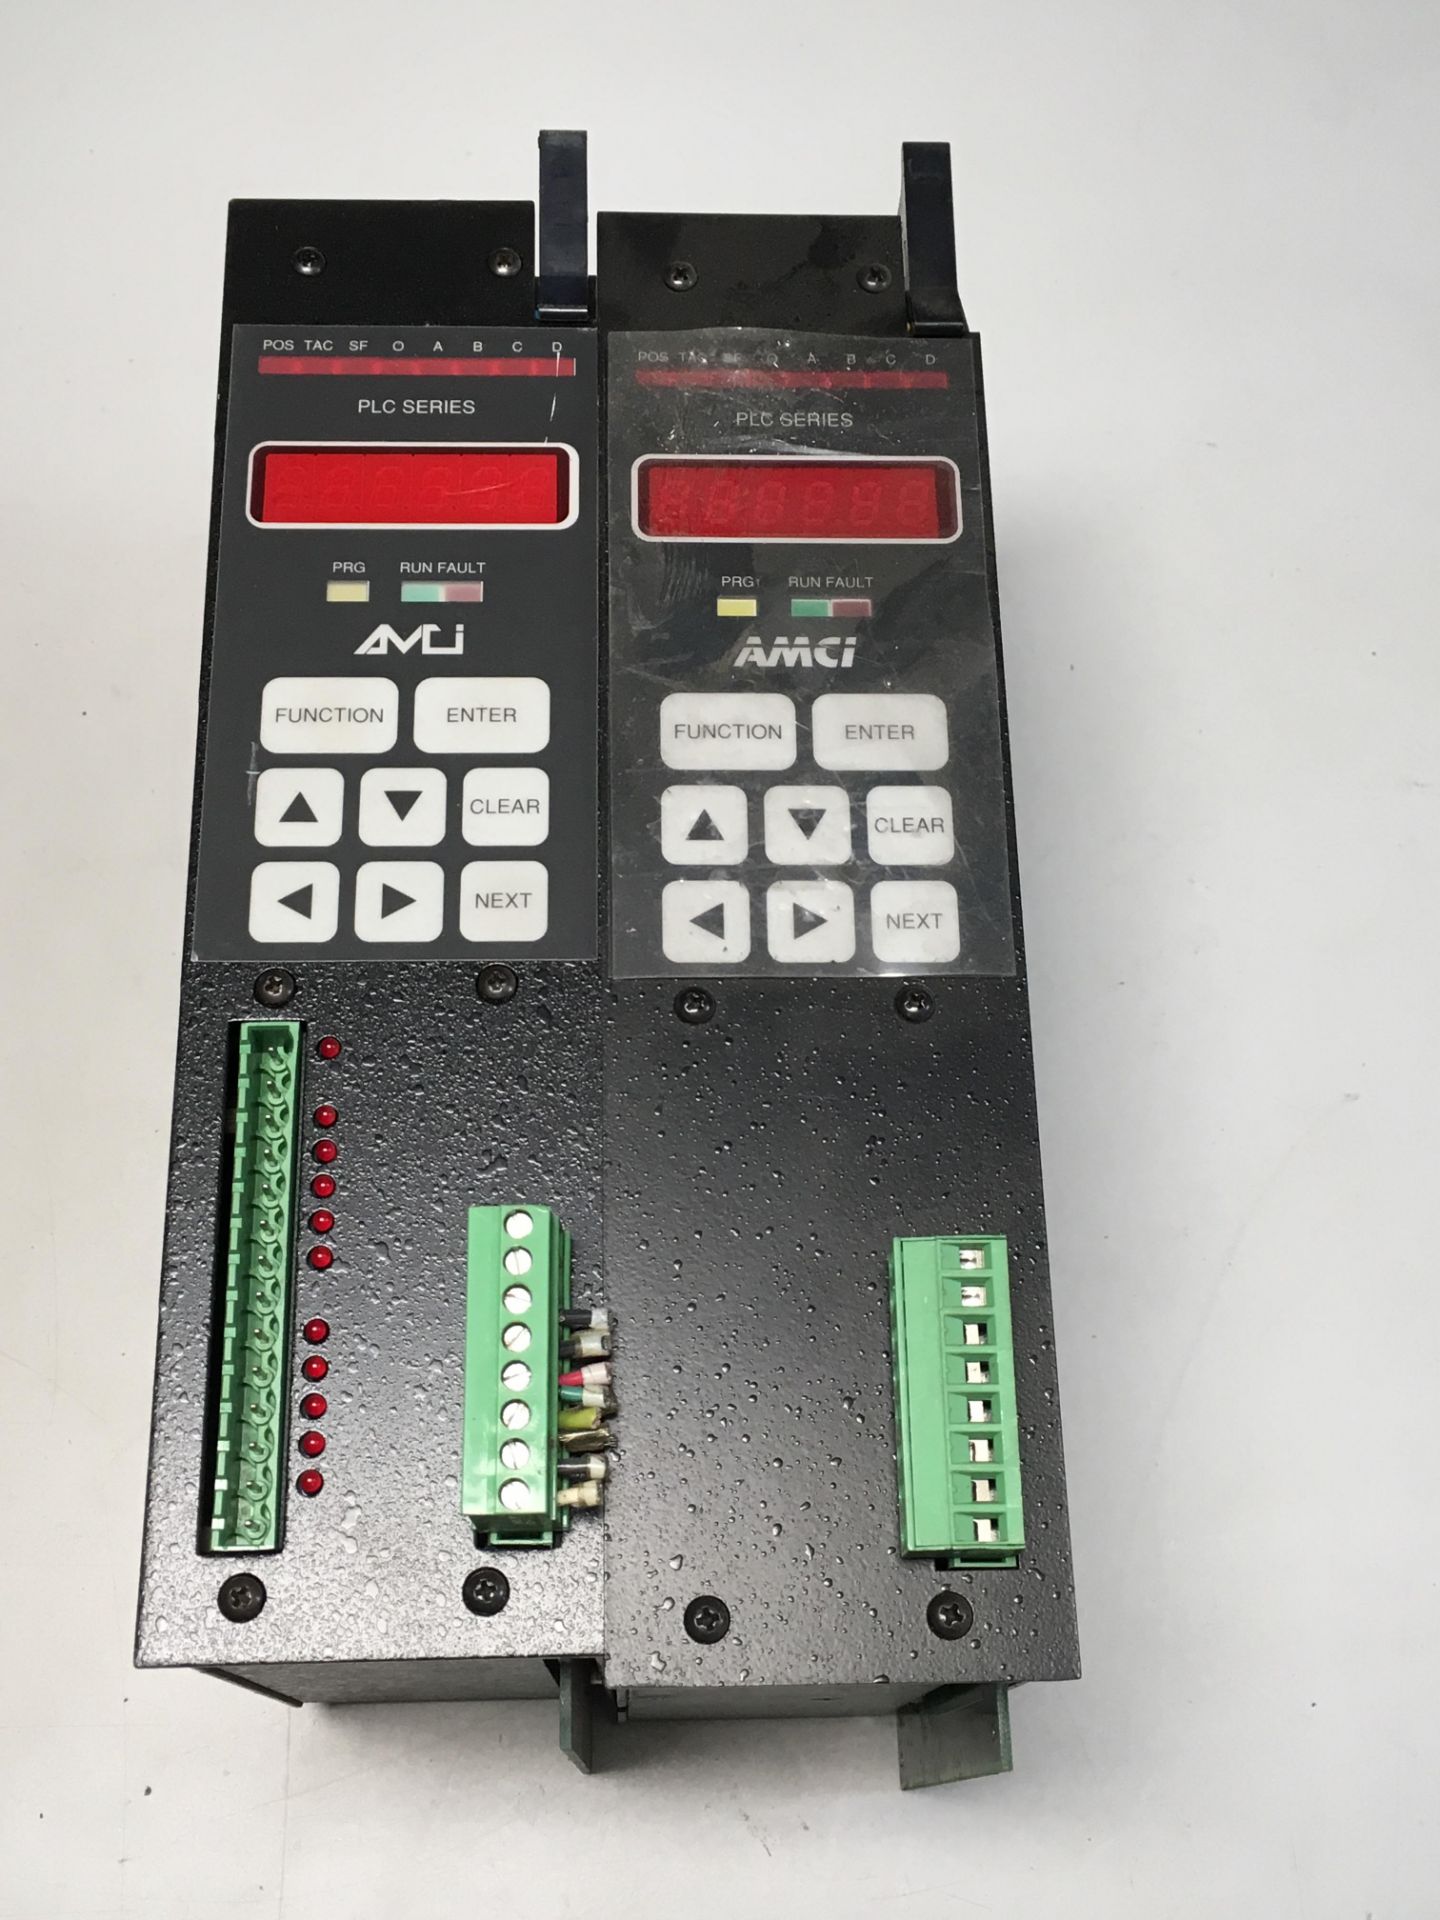 LOT OF AMCI/Allen Bradley 1771 PLC Series Prog Limit Switch Controller Modules